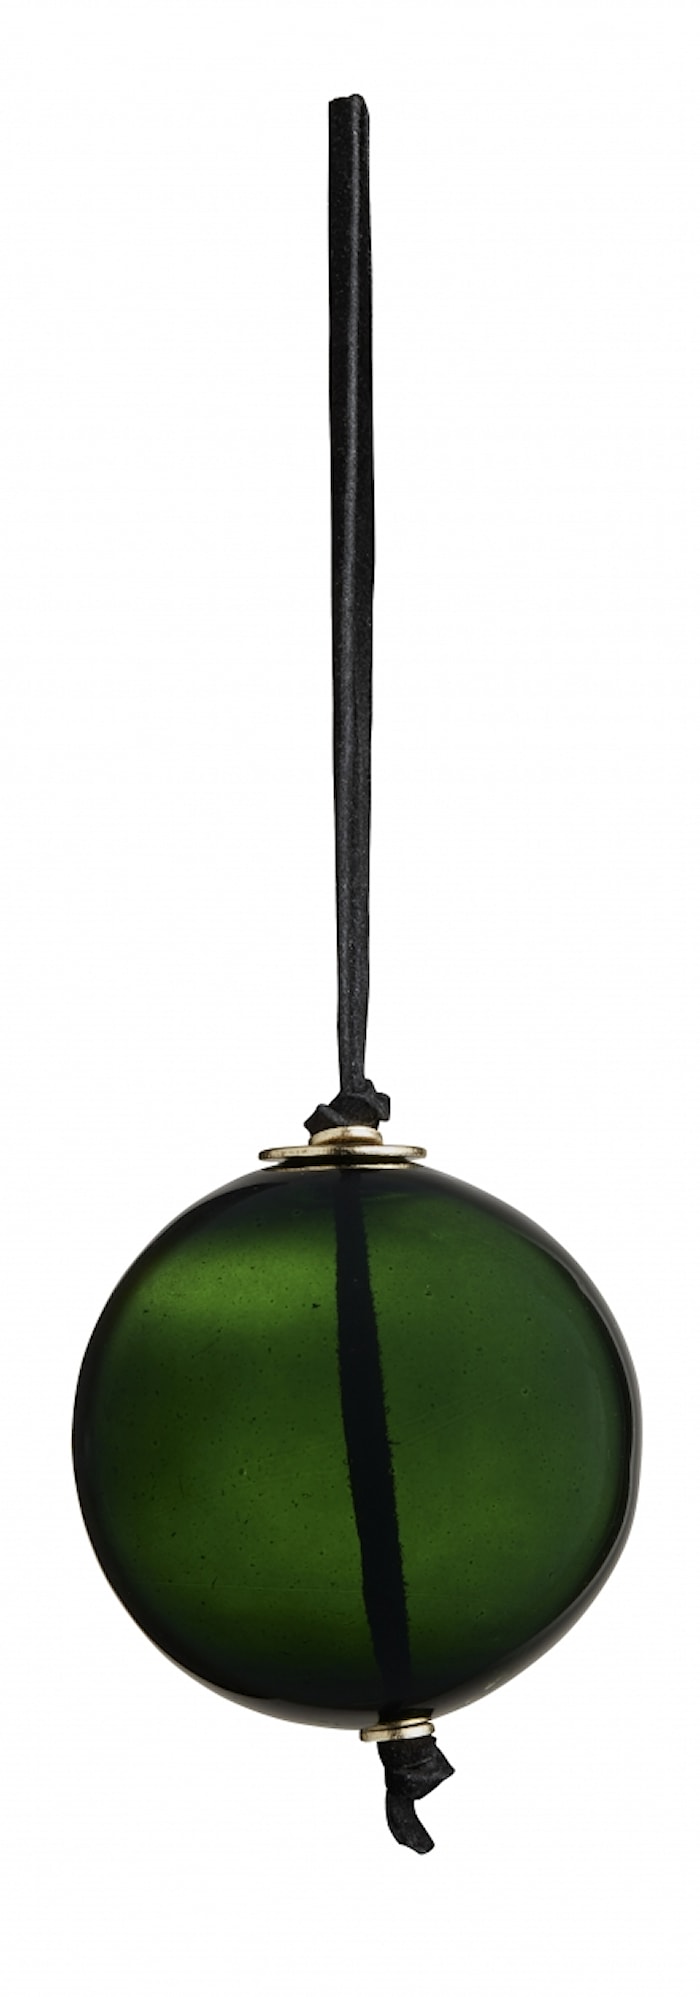 Boule de Noël verre daim vert 8 cm